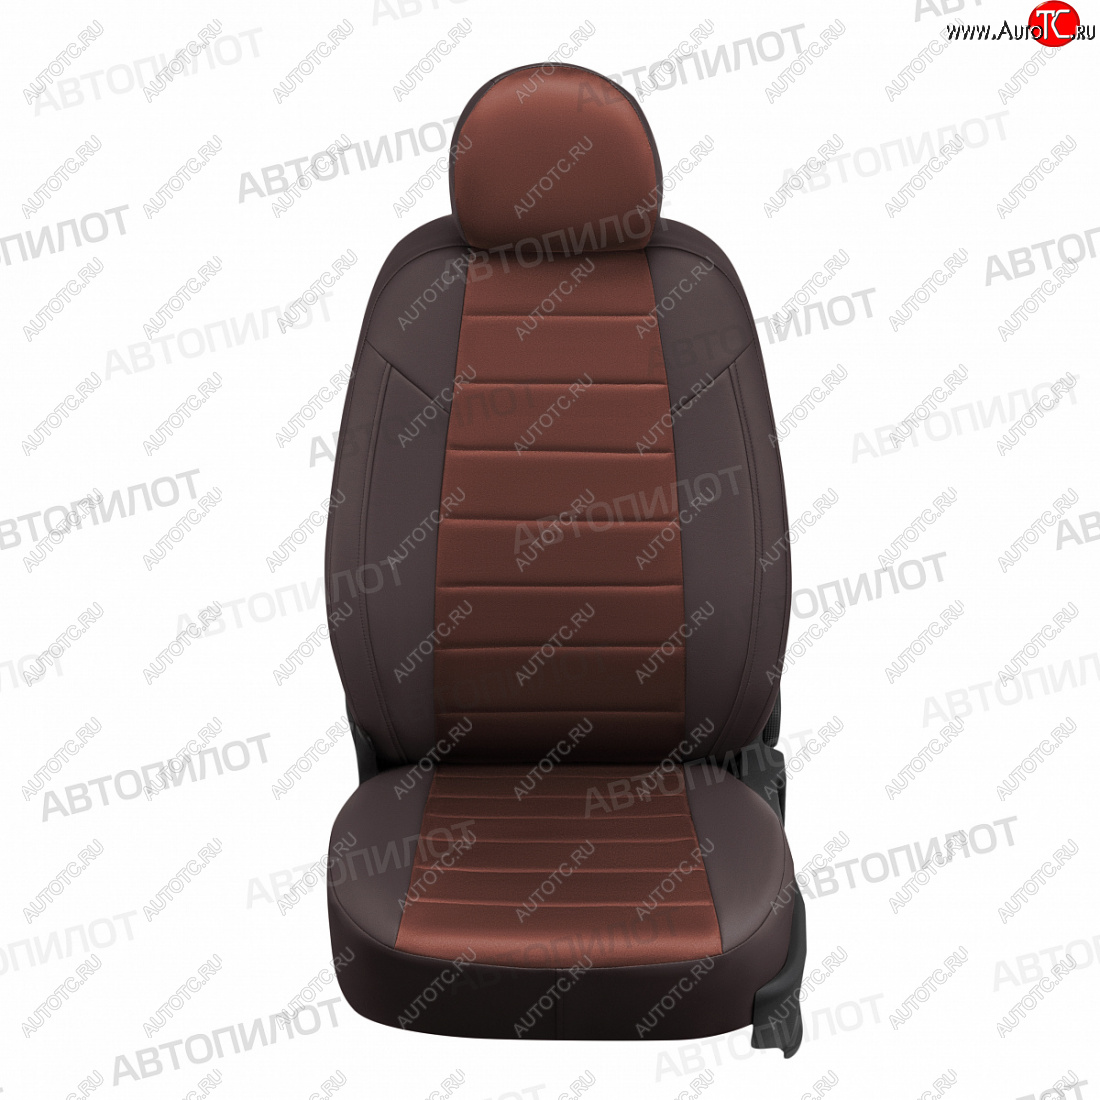 13 449 р. Чехлы сидений (экокожа/алькантара) Автопилот  KIA Ceed  1 ED (2006-2012) (шоколад)